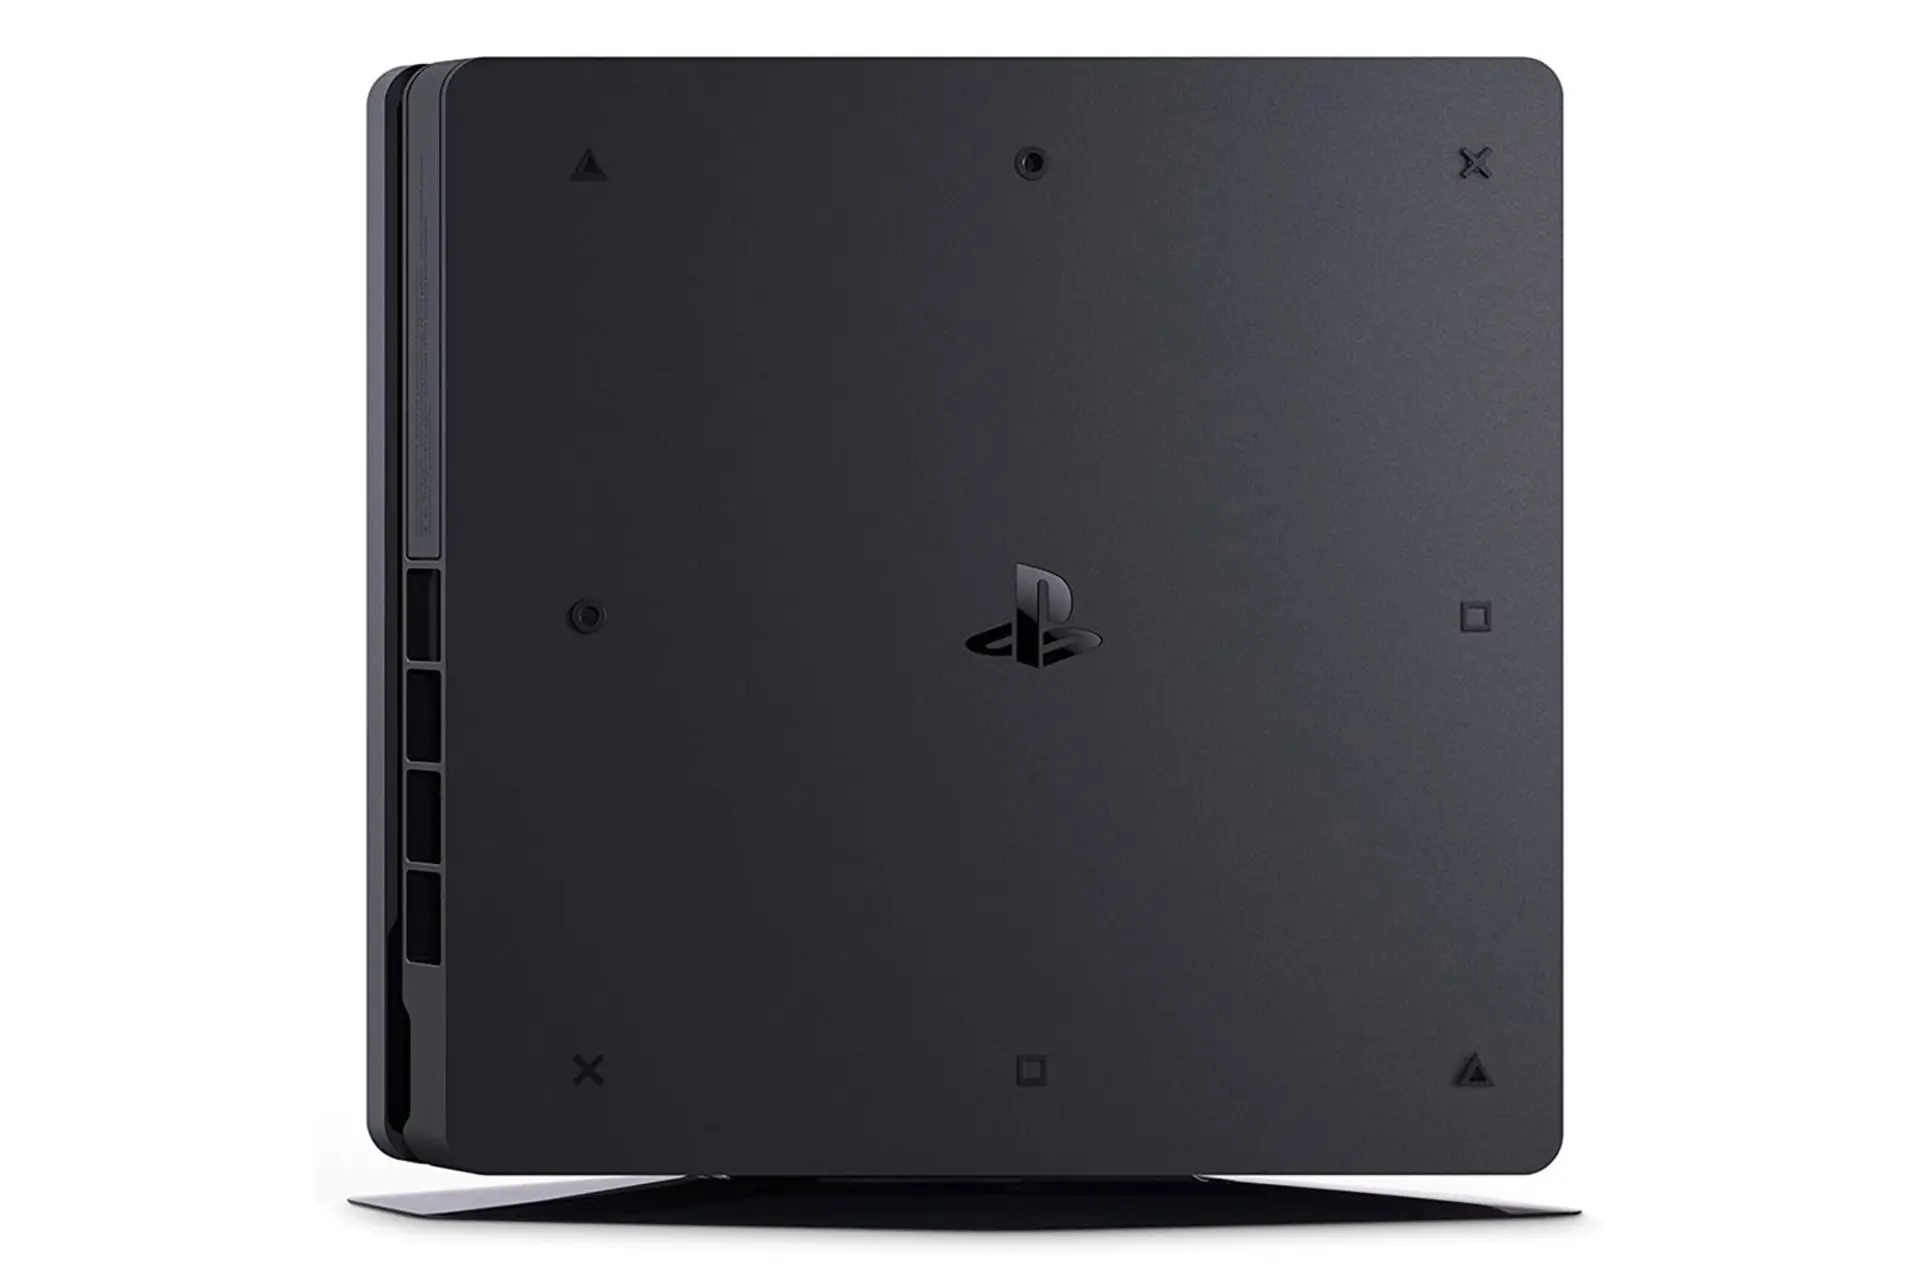 مرجع متخصصين ايران پلي استيشن 4 اسليم سوني نماي زير حالت ايستاده خروجي هوا / Sony Playstation 4 Slim